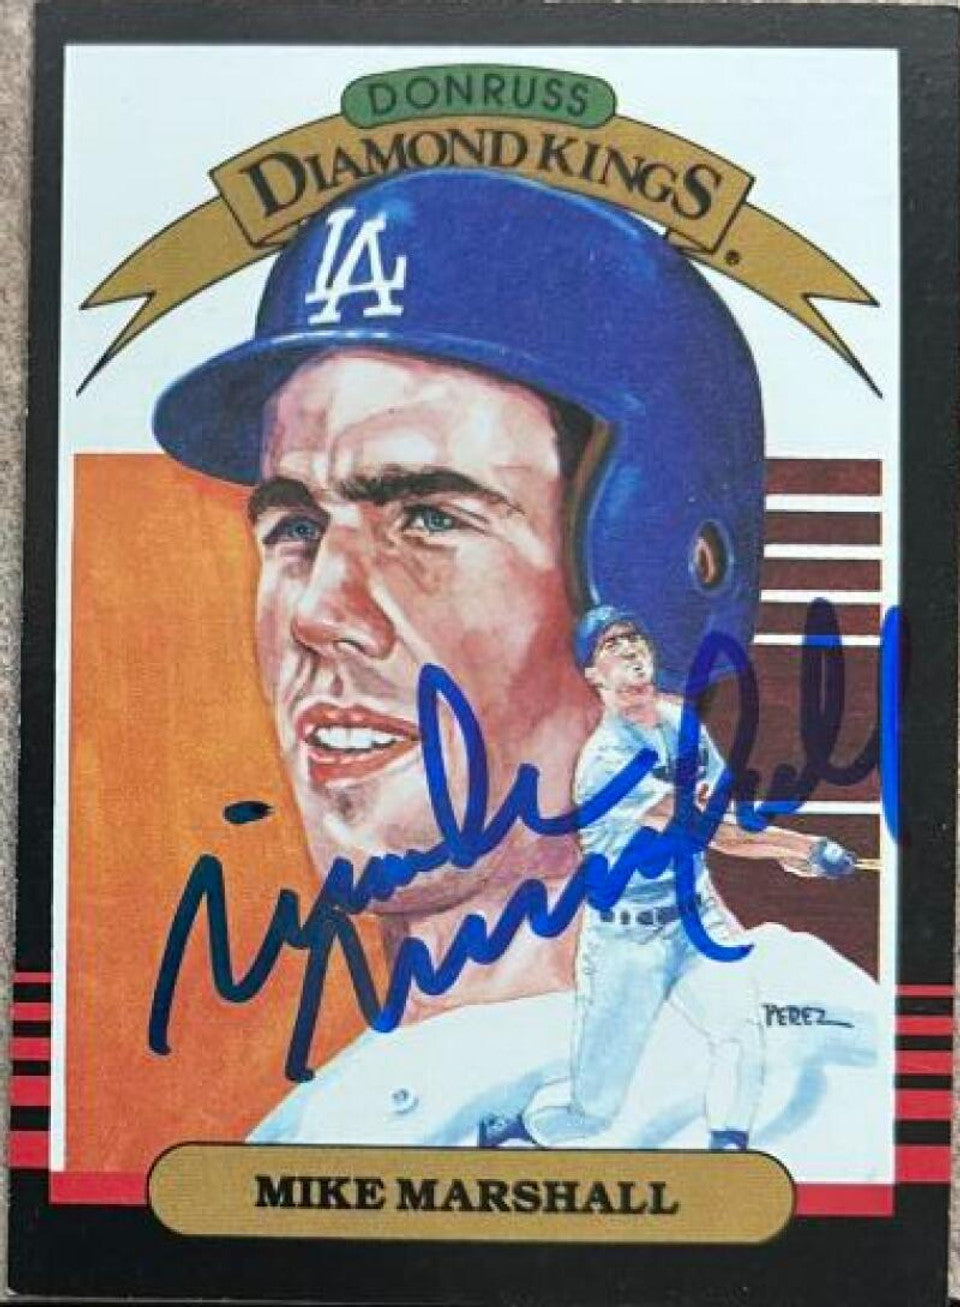 Mike Marshall Signed 1985 Donruss Diamond Kings Baseball Card - Los Angeles Dodgers